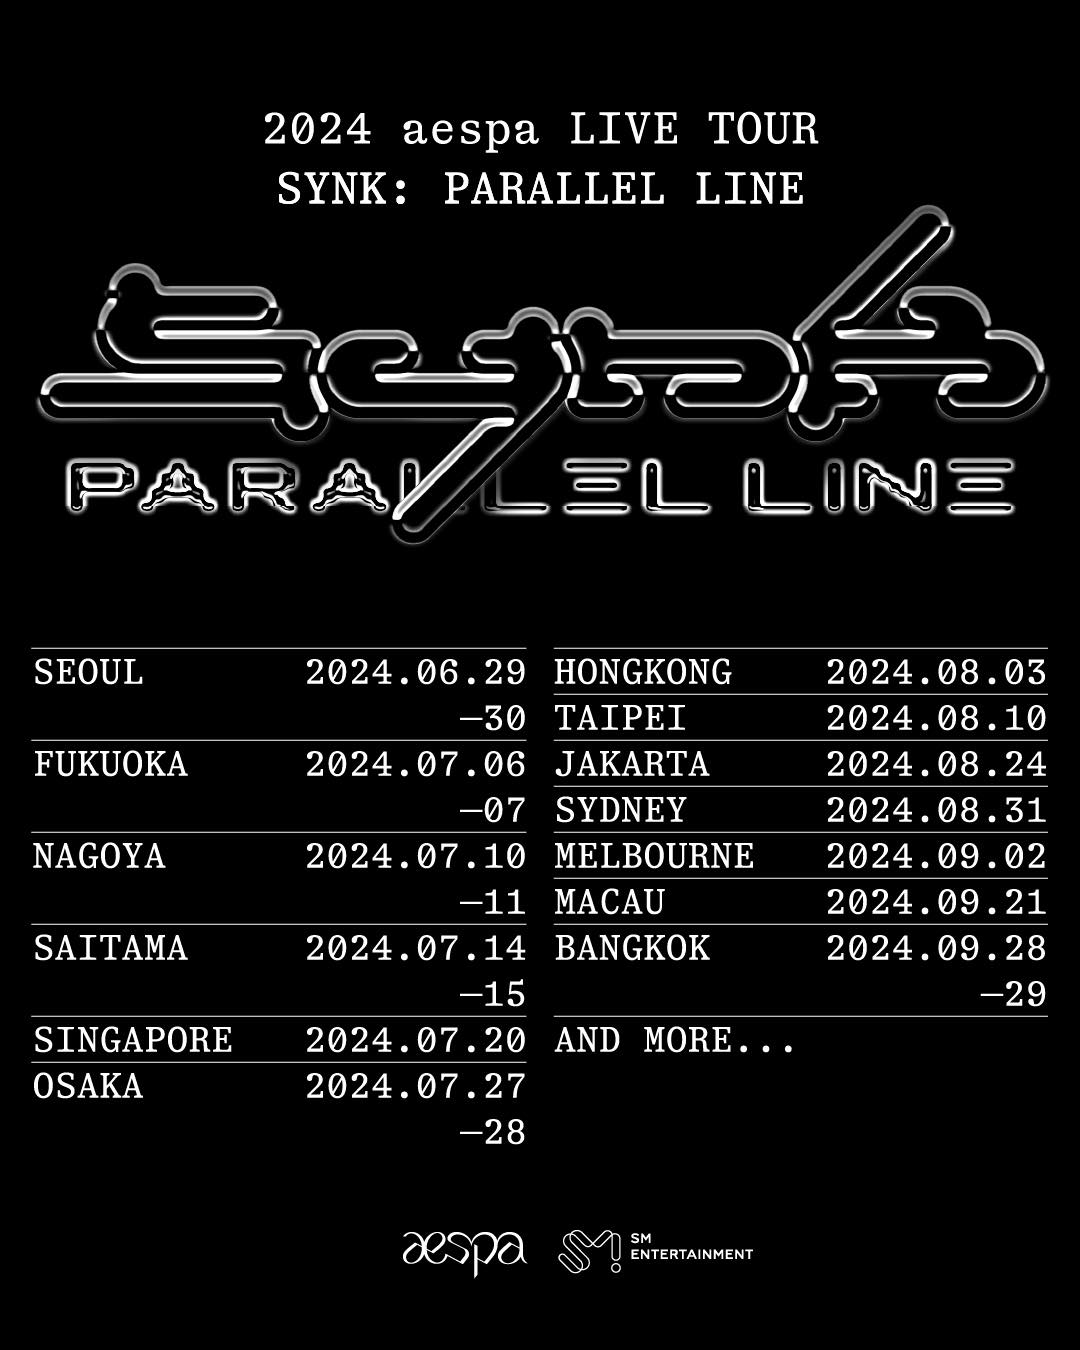 2024 aespa Live Tour SYNK Parallel Line Kpop Wiki Fandom